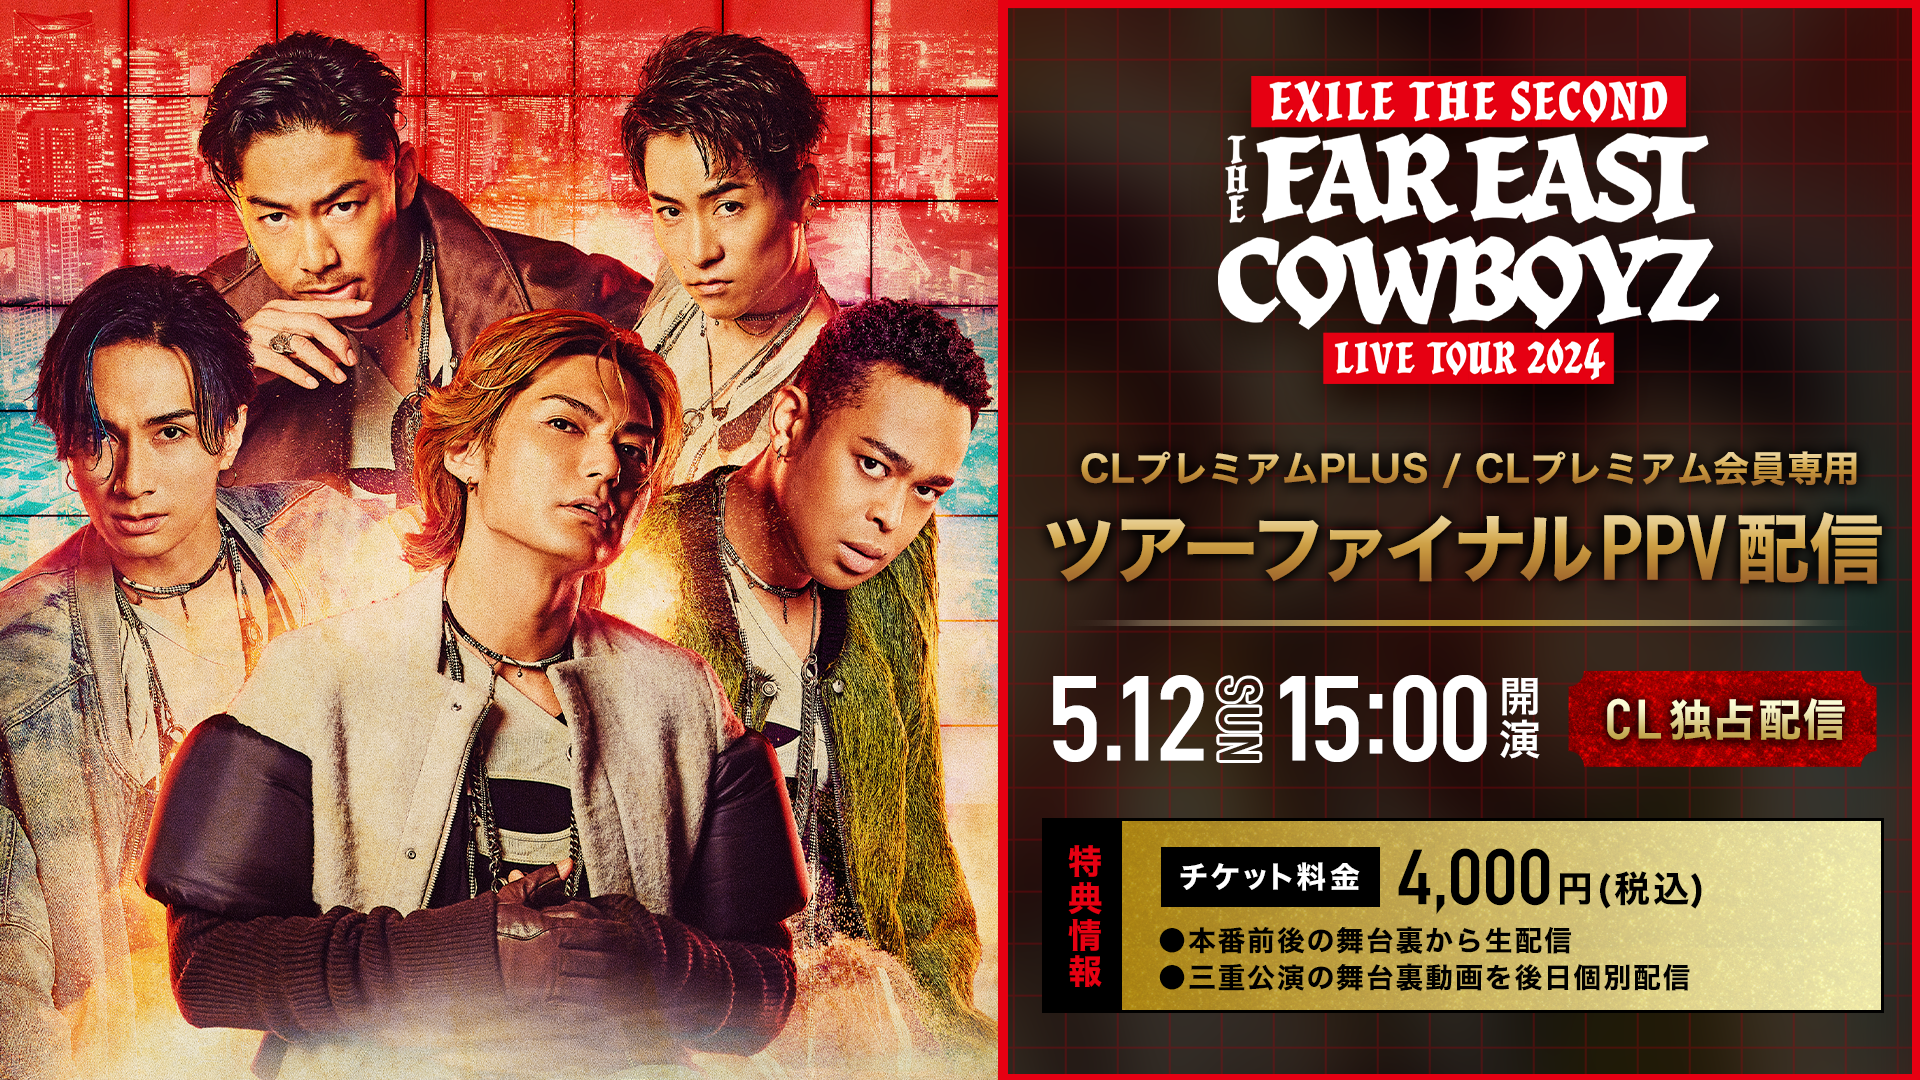 【CLプレミアム / CLプレミアムPLUS会員専用】「EXILE THE SECOND LIVE TOUR 2024 “THE FAR EAST  COWBOYZ